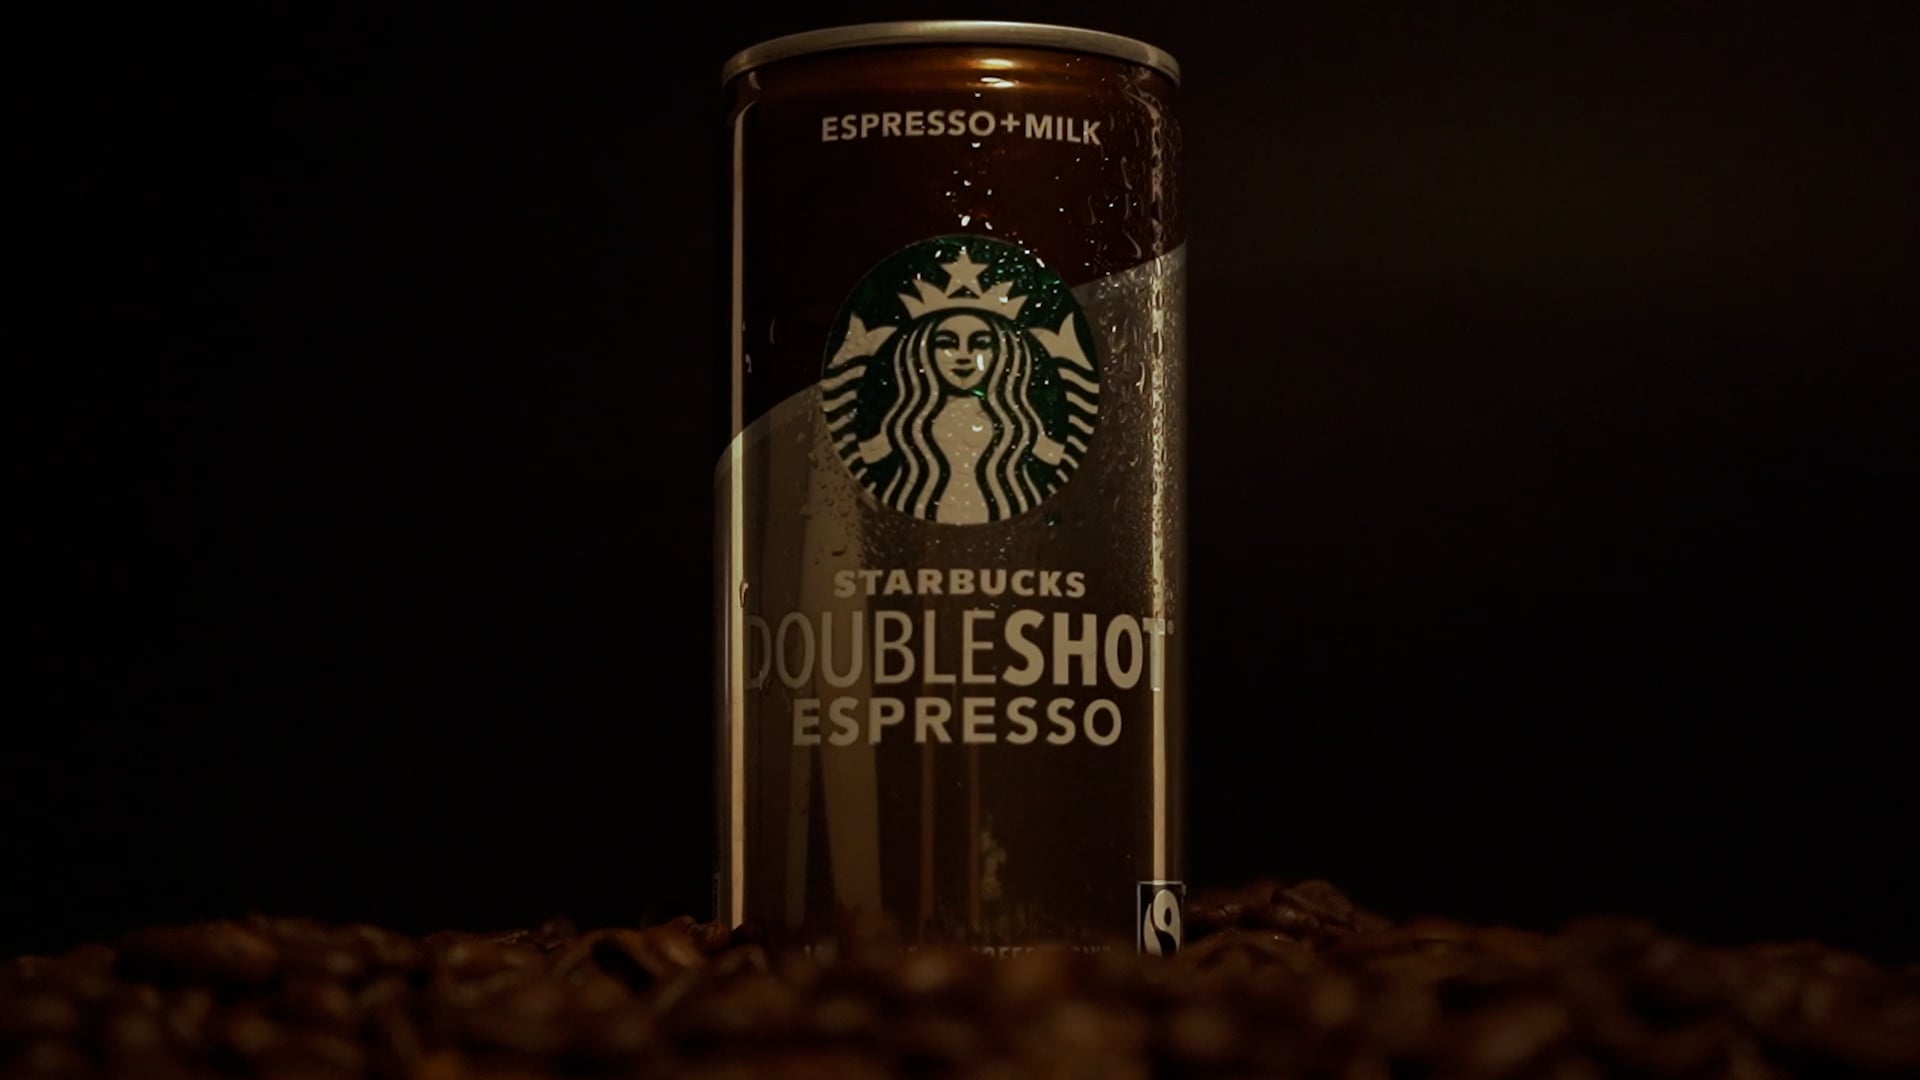 Starbucks Doubleshot Espresso